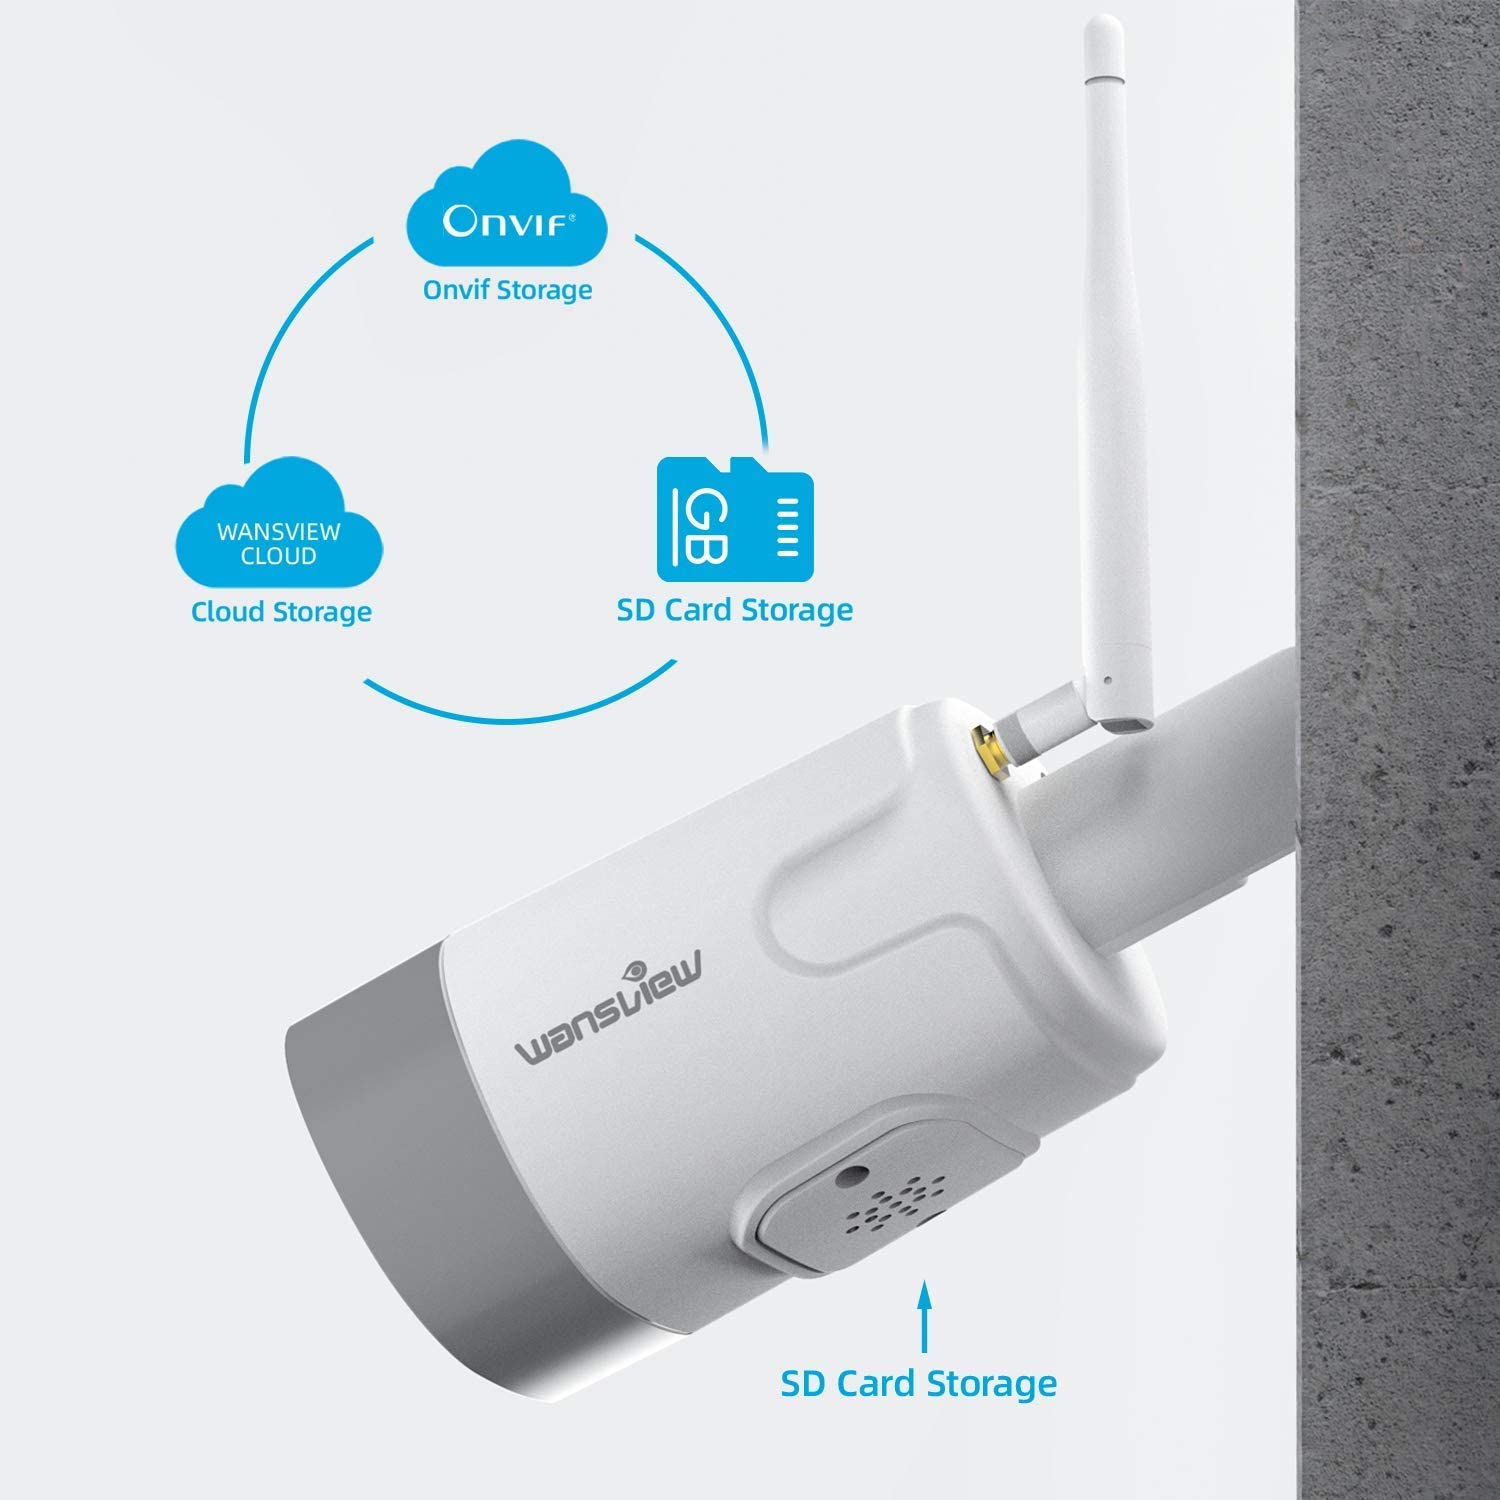 Wansview W5 1080P Wireless Wi-Fi Home Surveillance Waterproof Camera